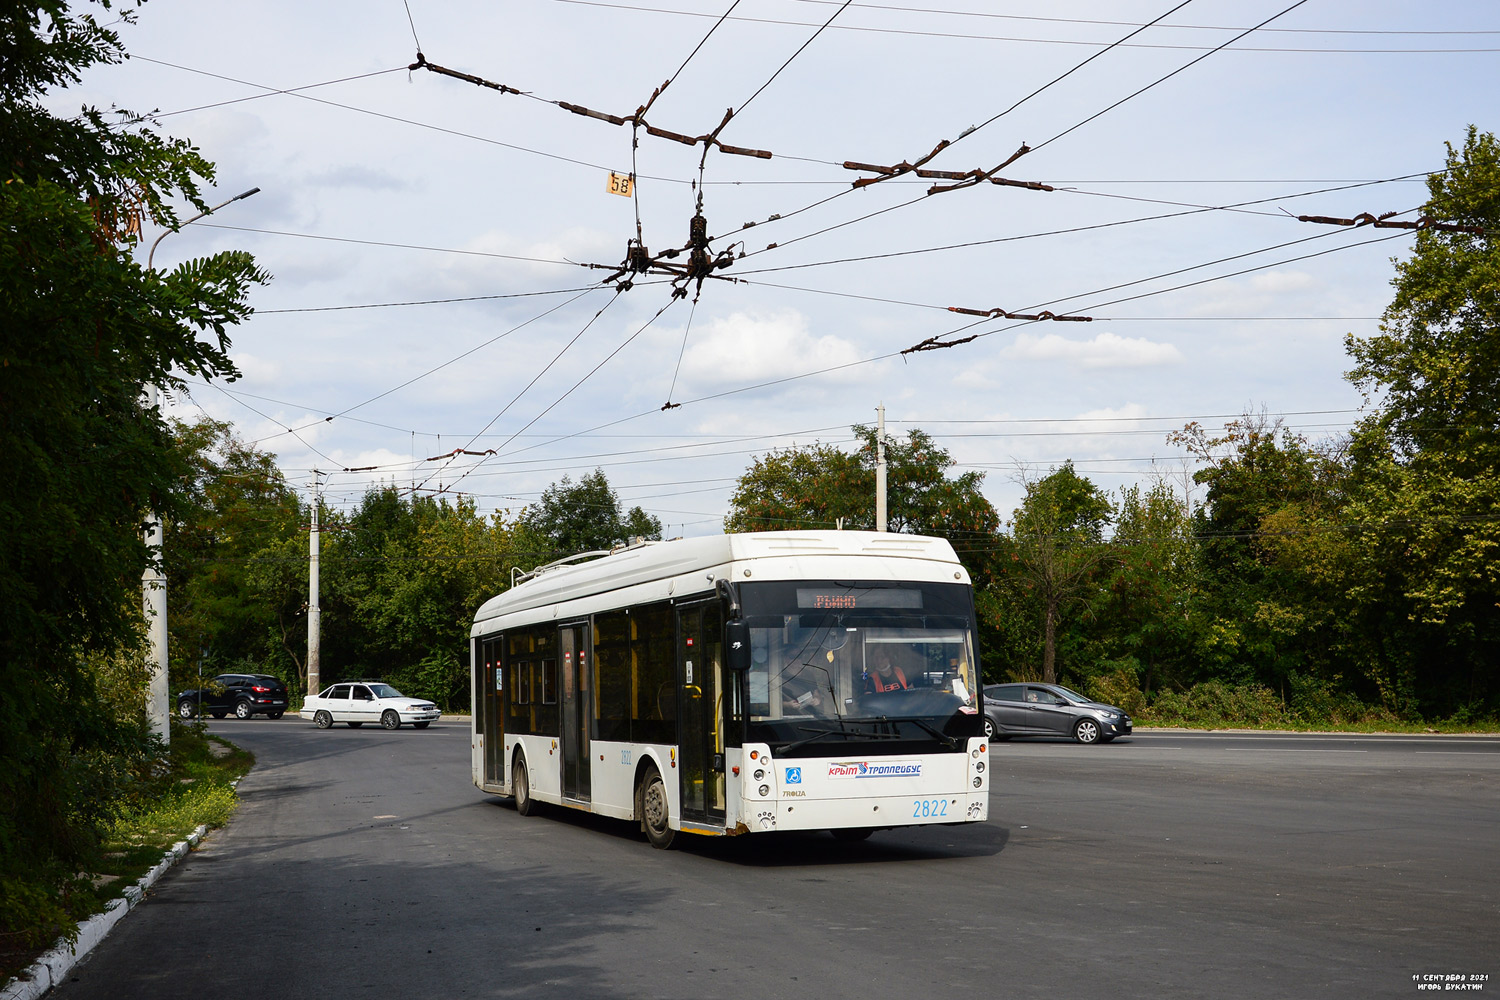 Krymski trolejbus, Trolza-5265.03 “Megapolis” Nr 2822; Krymski trolejbus — The movement of trolleybuses without CS (autonomous running).